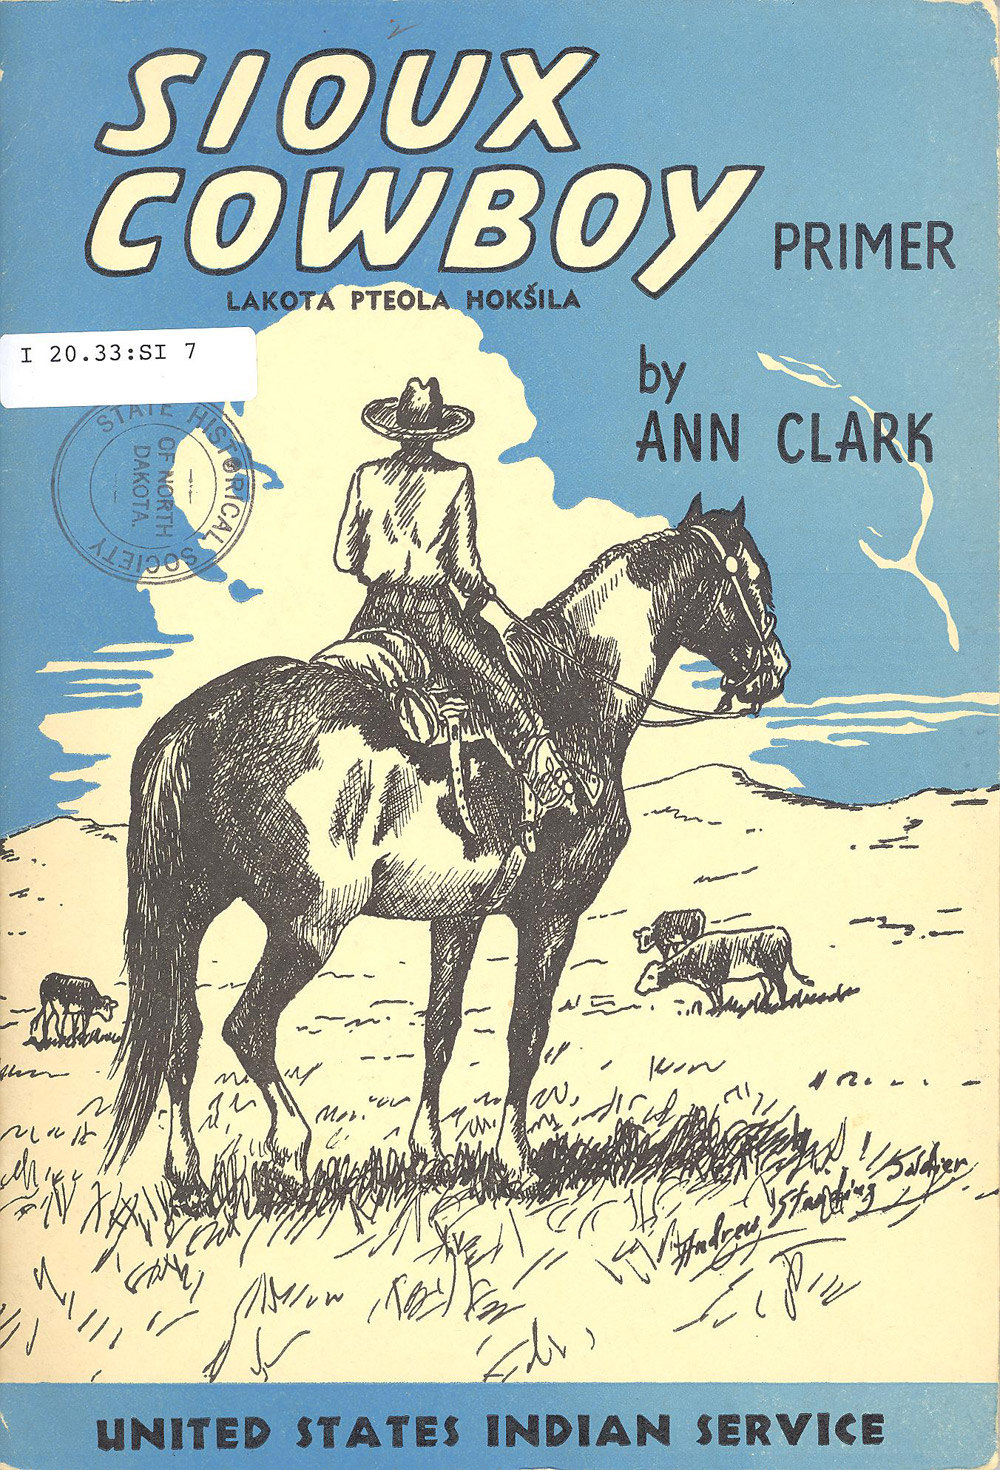 Sioux Cowboy Primer Cover